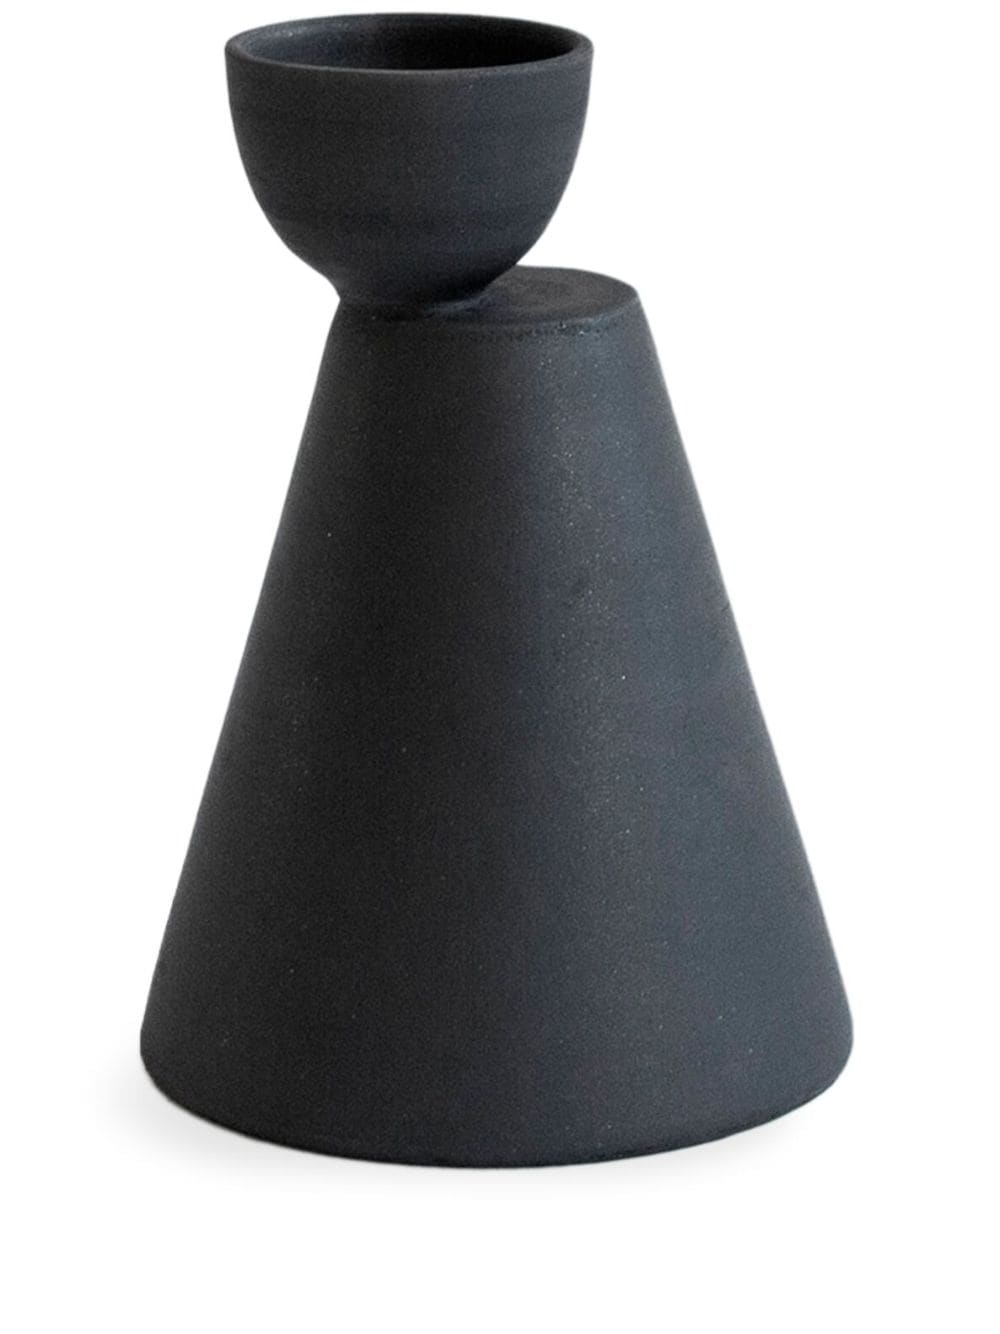 Origin Made Charred Cone clay vase (27cm) - Black